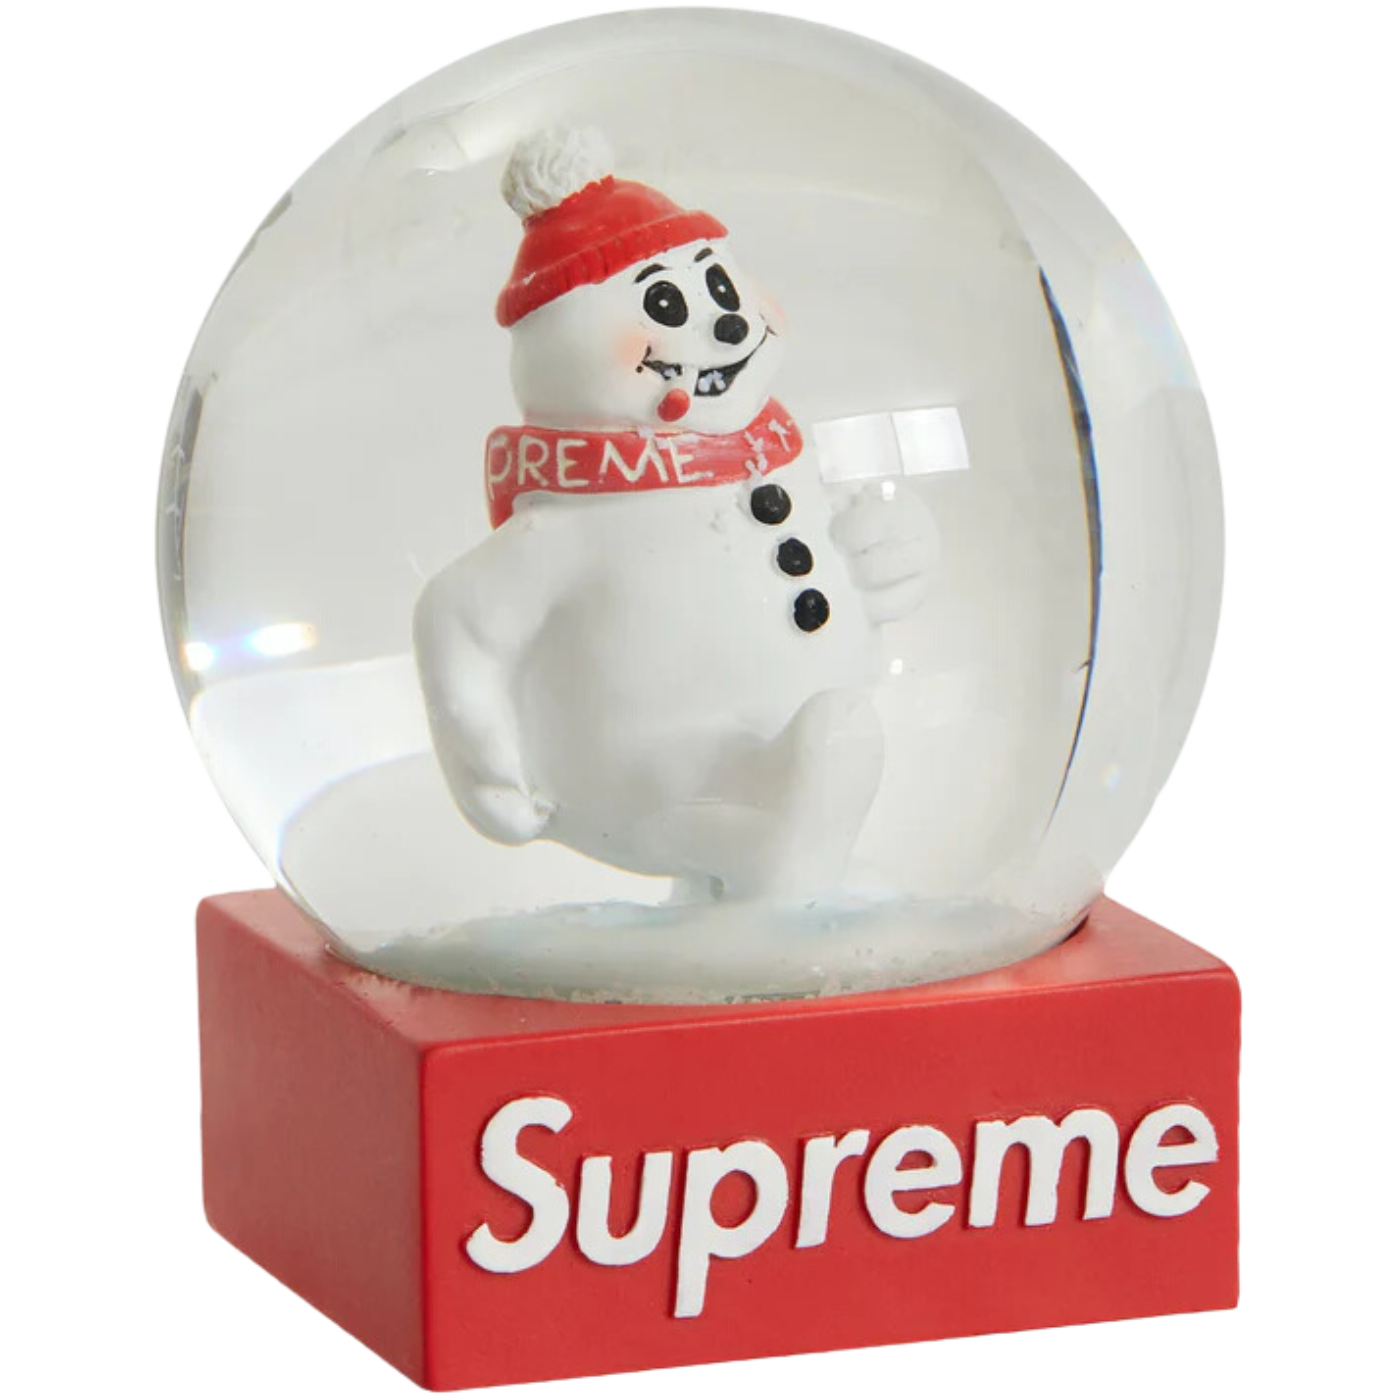 Supreme Snowman Snowglobe